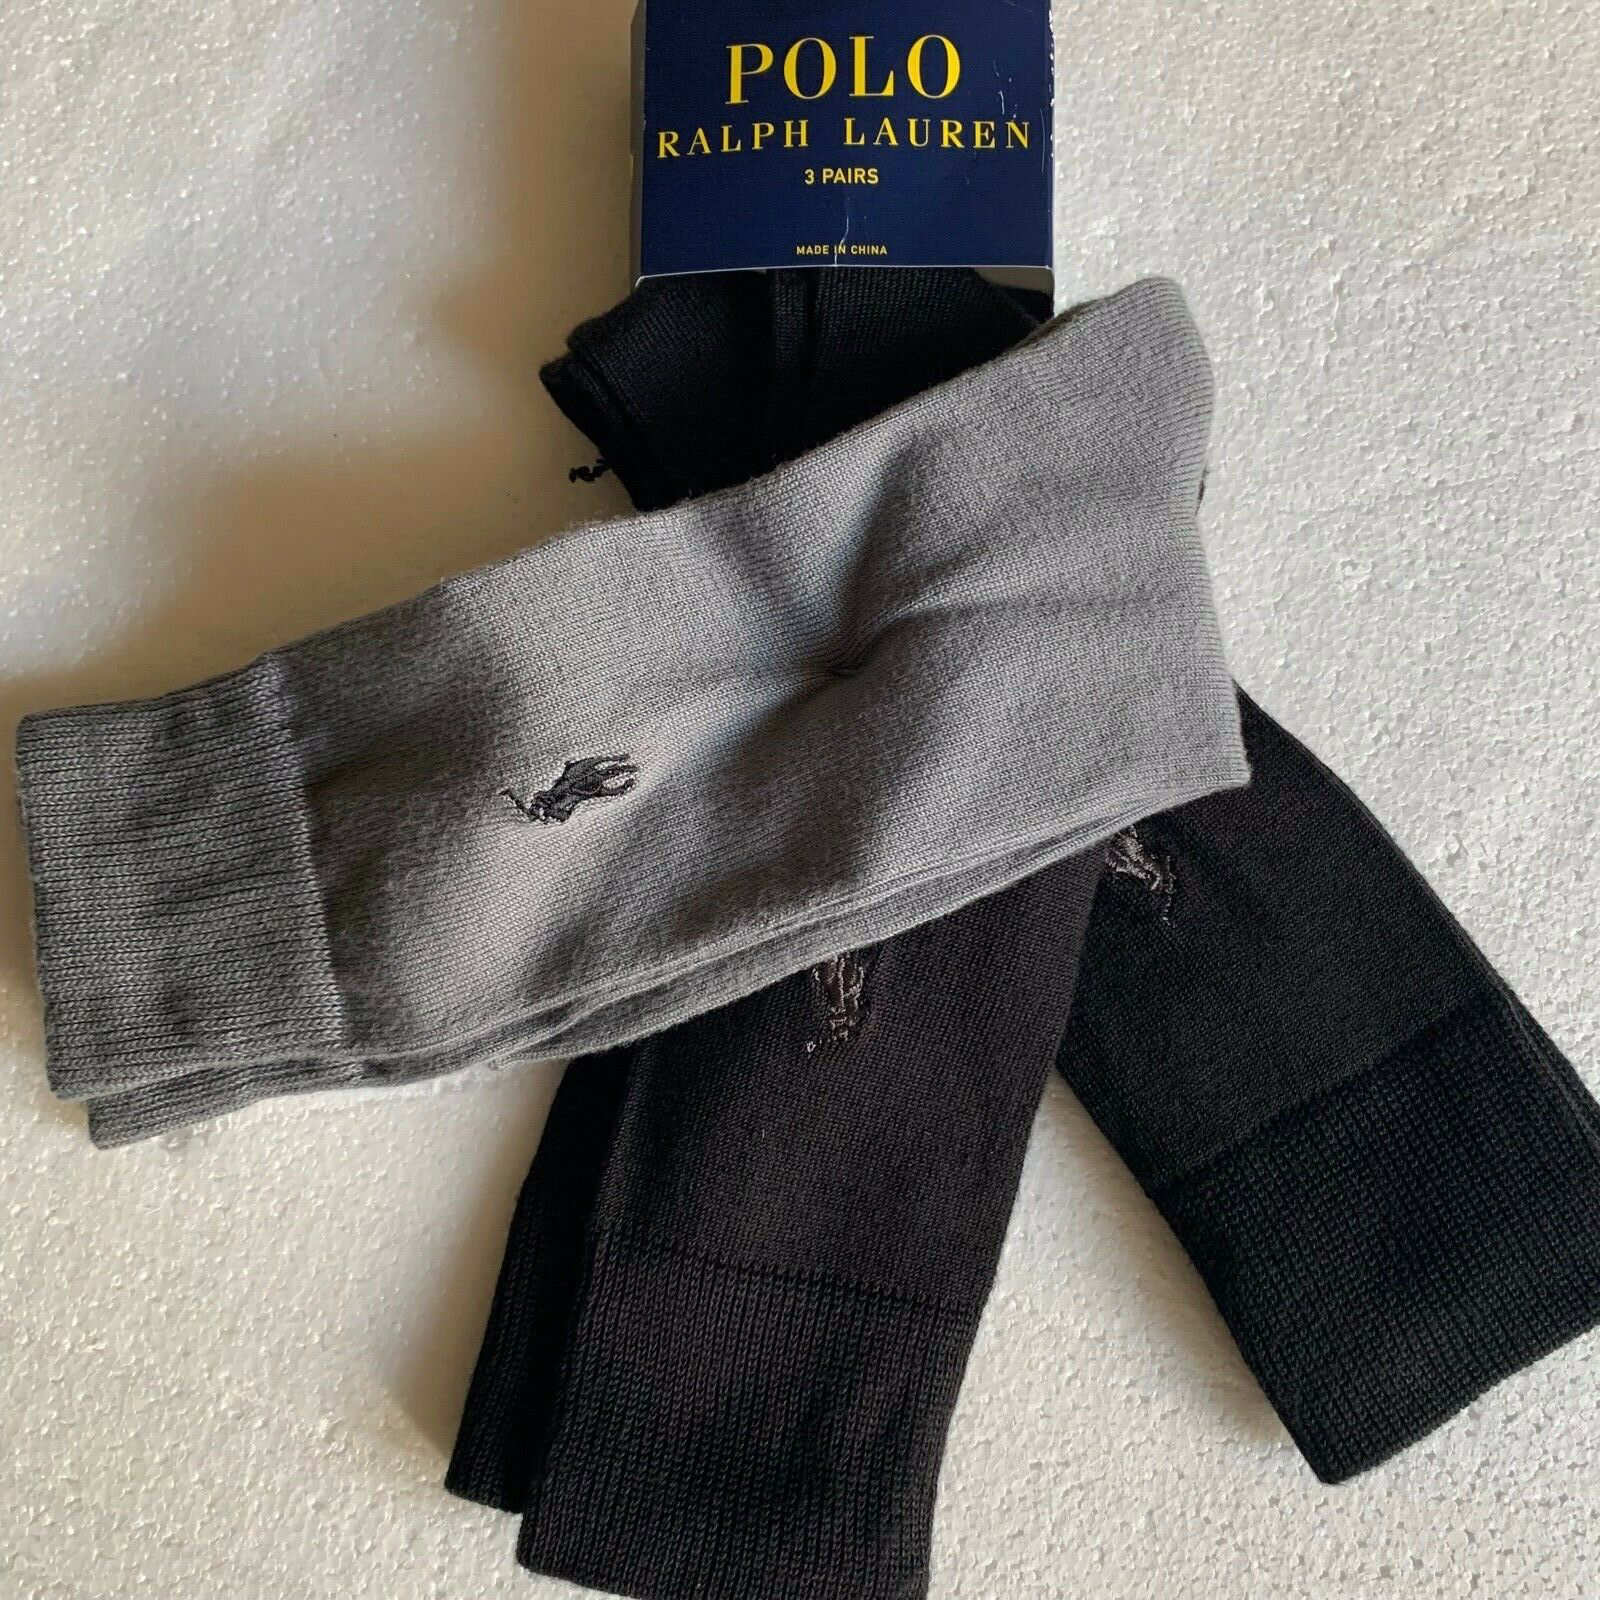 Polo Ralph Lauren Dress Socks 10-13 shoes - $21.00